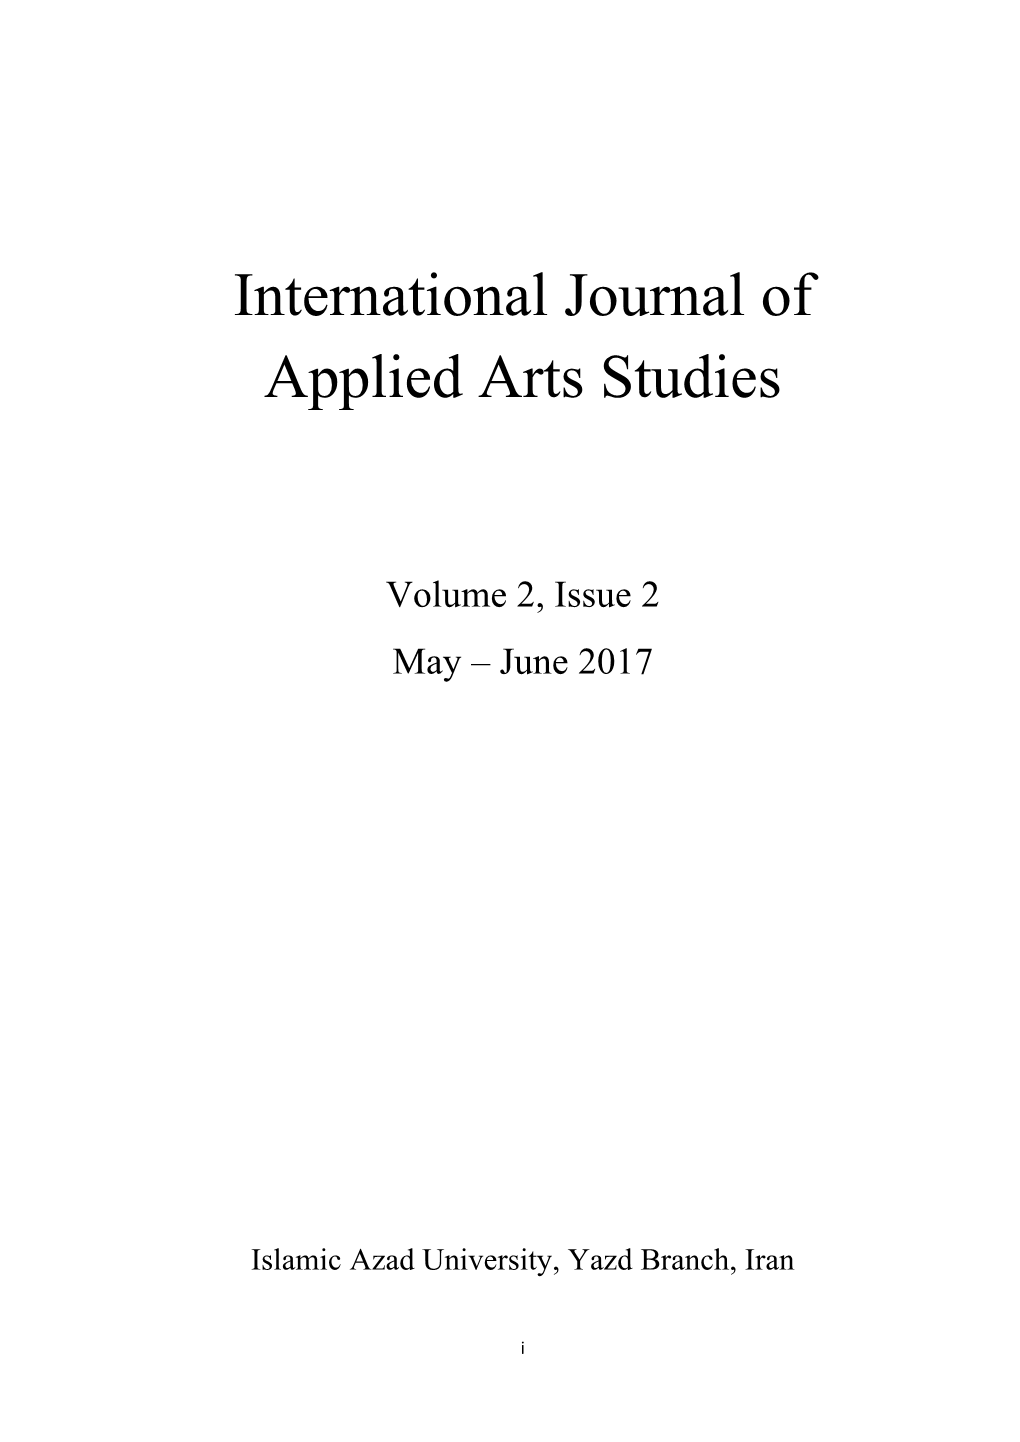 International Journal of Applied Arts Studies